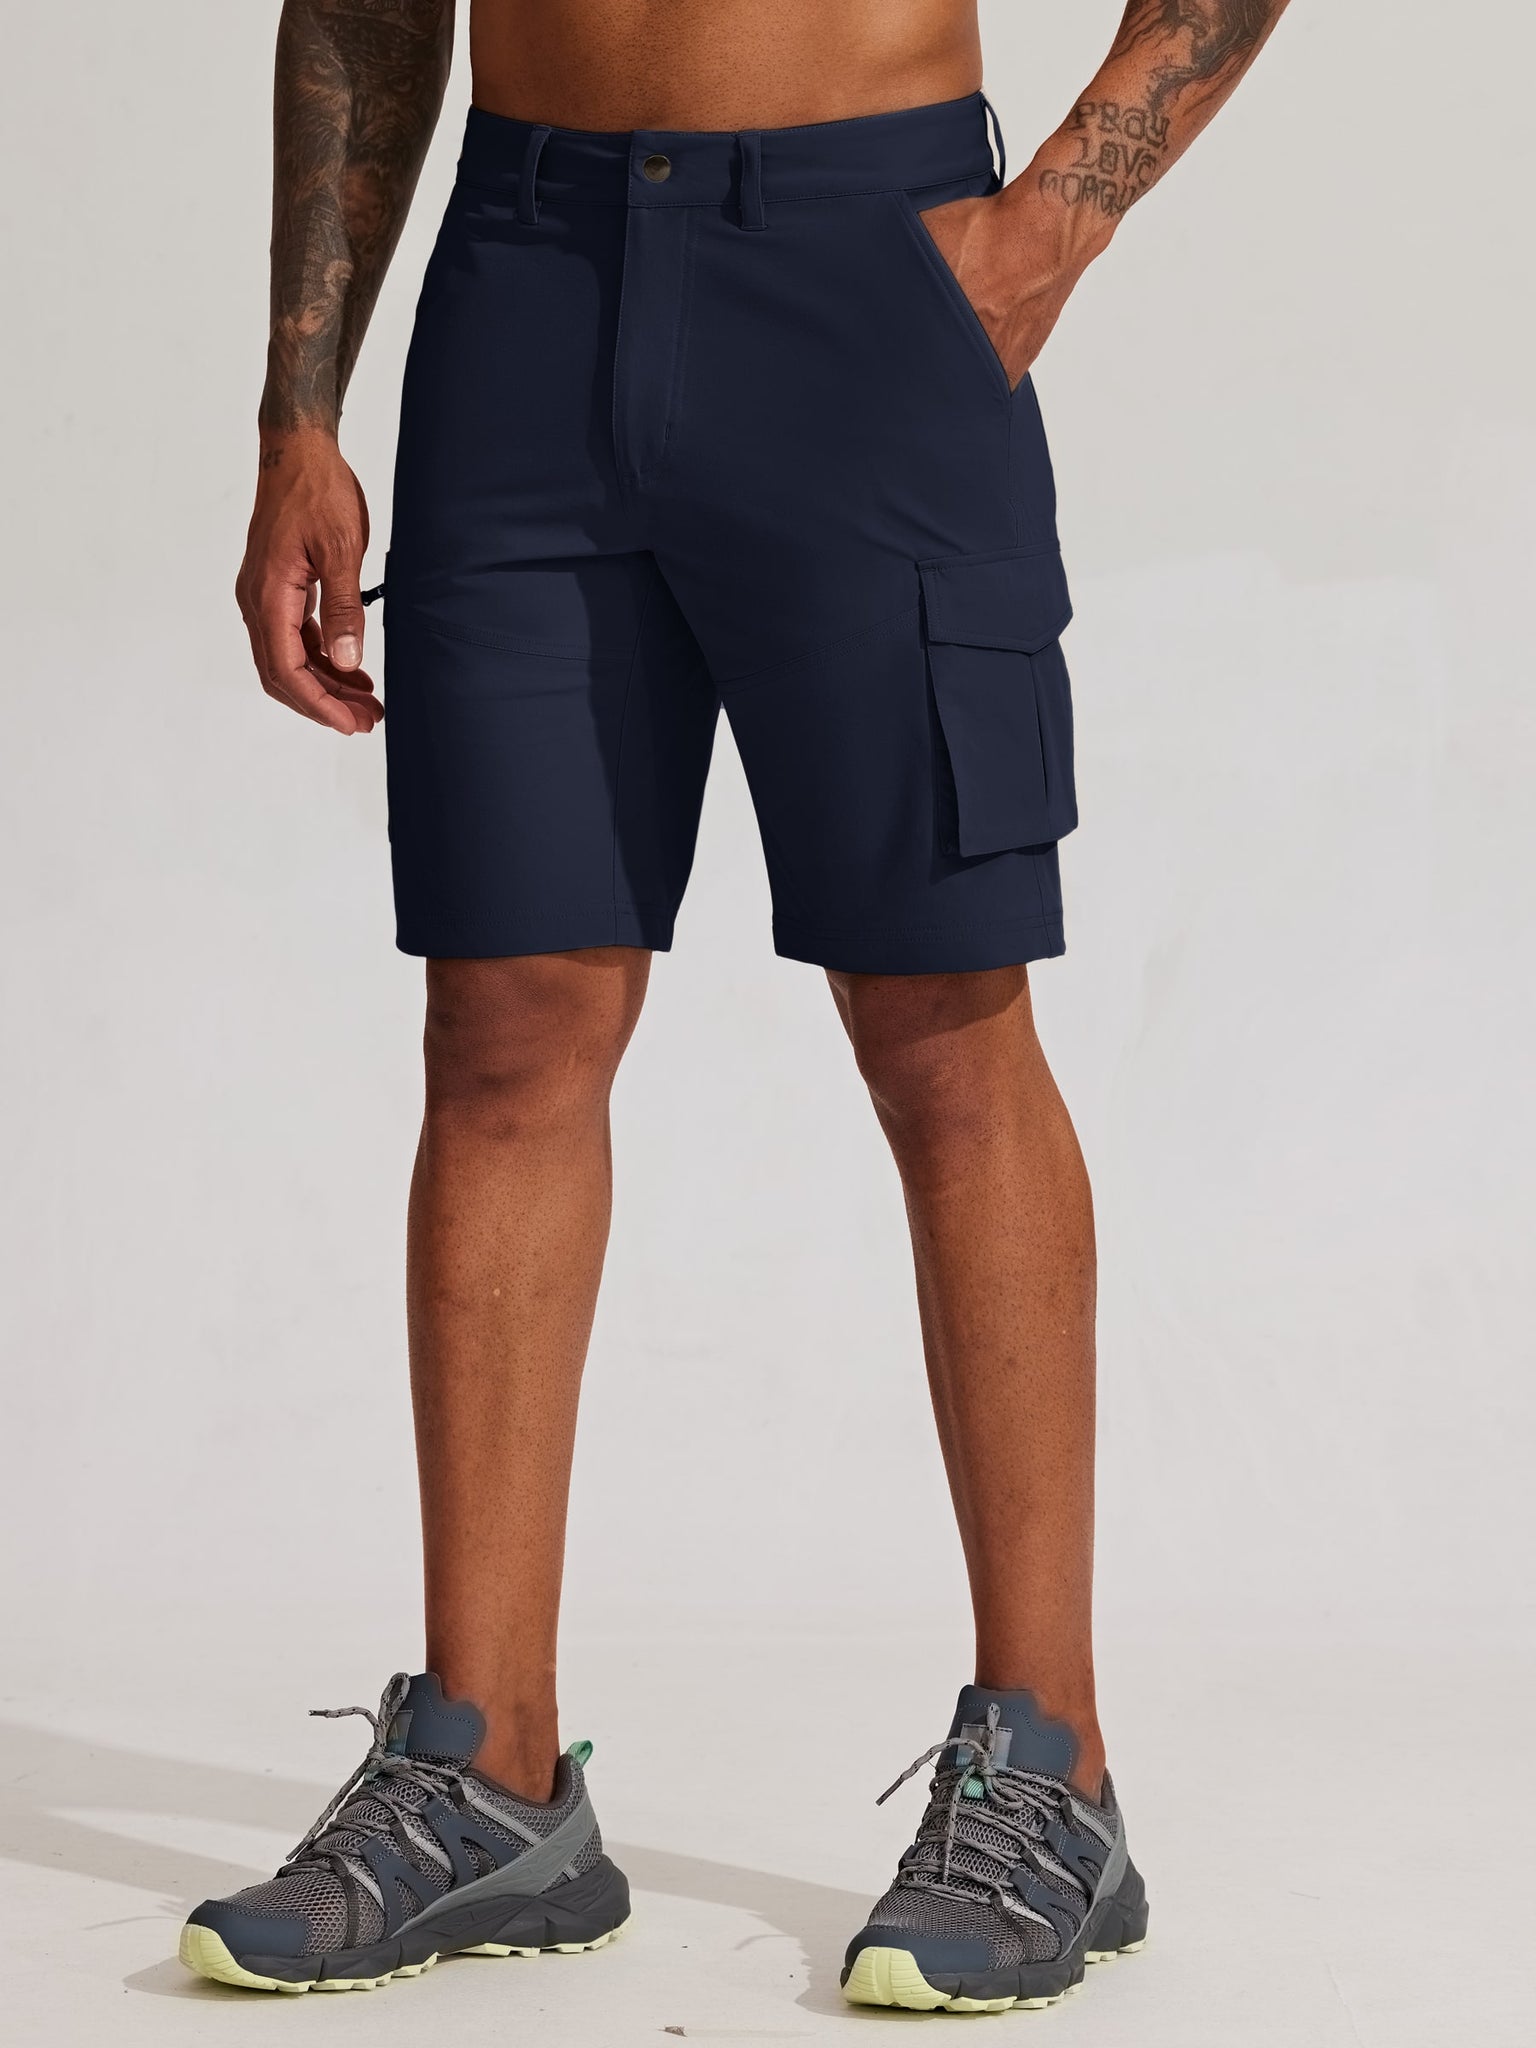 Men's Stretch Cargo Shorts 9 Inch_DeepBlue4